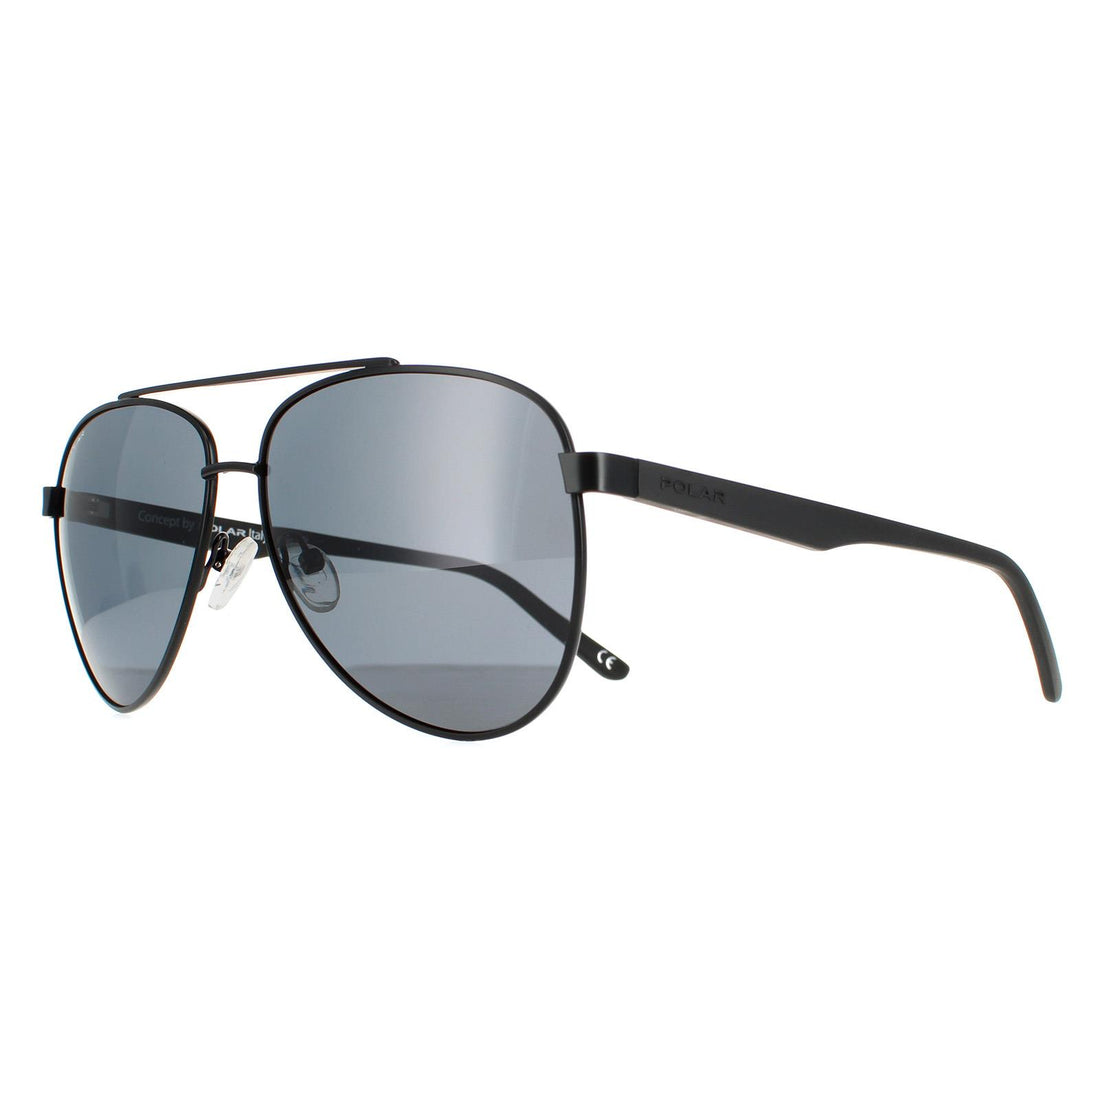 Polar Sunglasses 756 COL.76 Black Grey Polarized